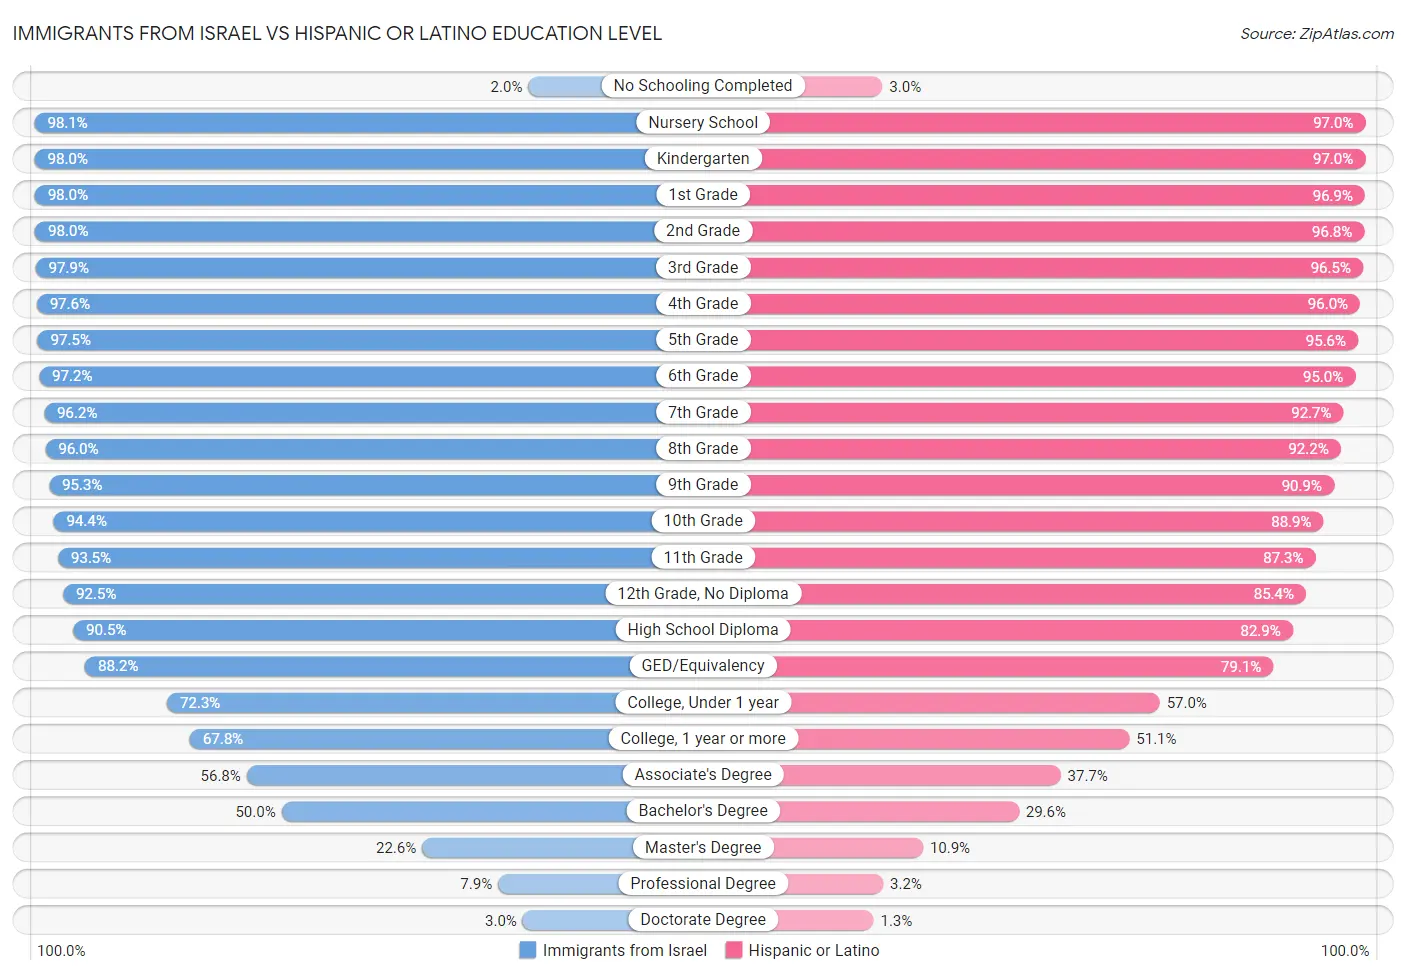 Immigrants from Israel vs Hispanic or Latino Education Level